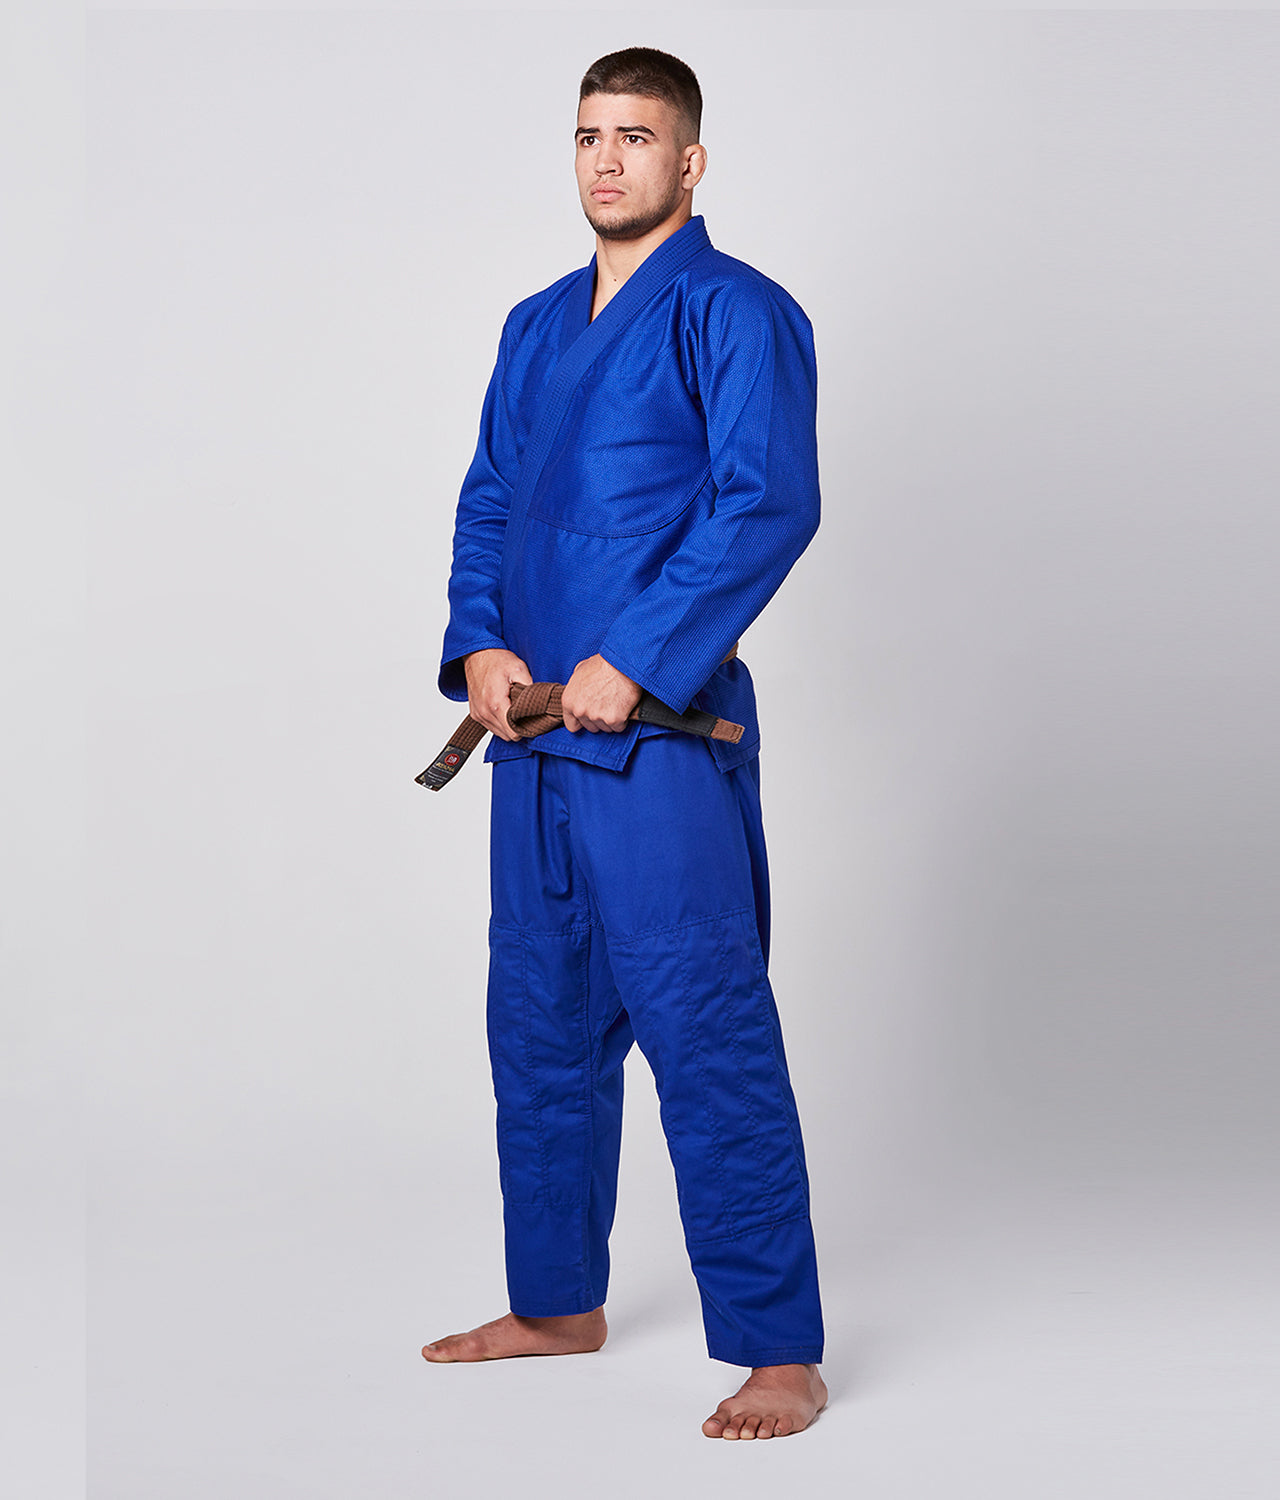 Men's Essential Blue Brazilian Jiu Jitsu BJJ Gi